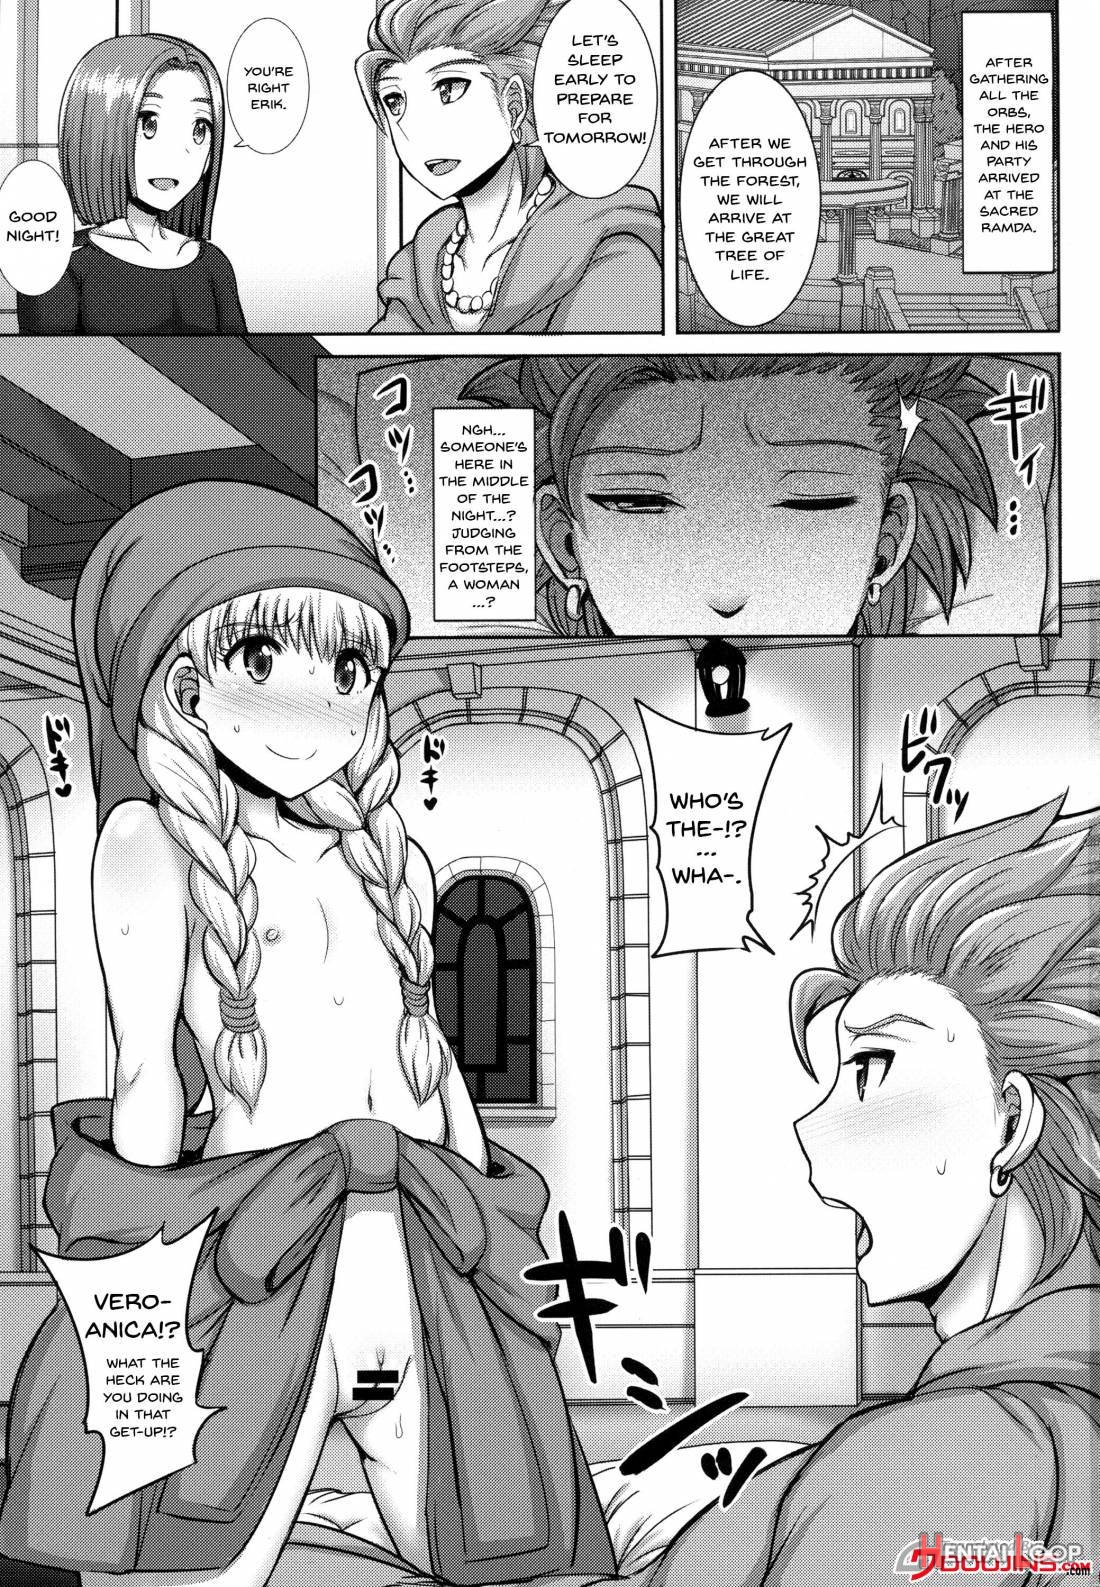 Veronica-sama Returns page 2